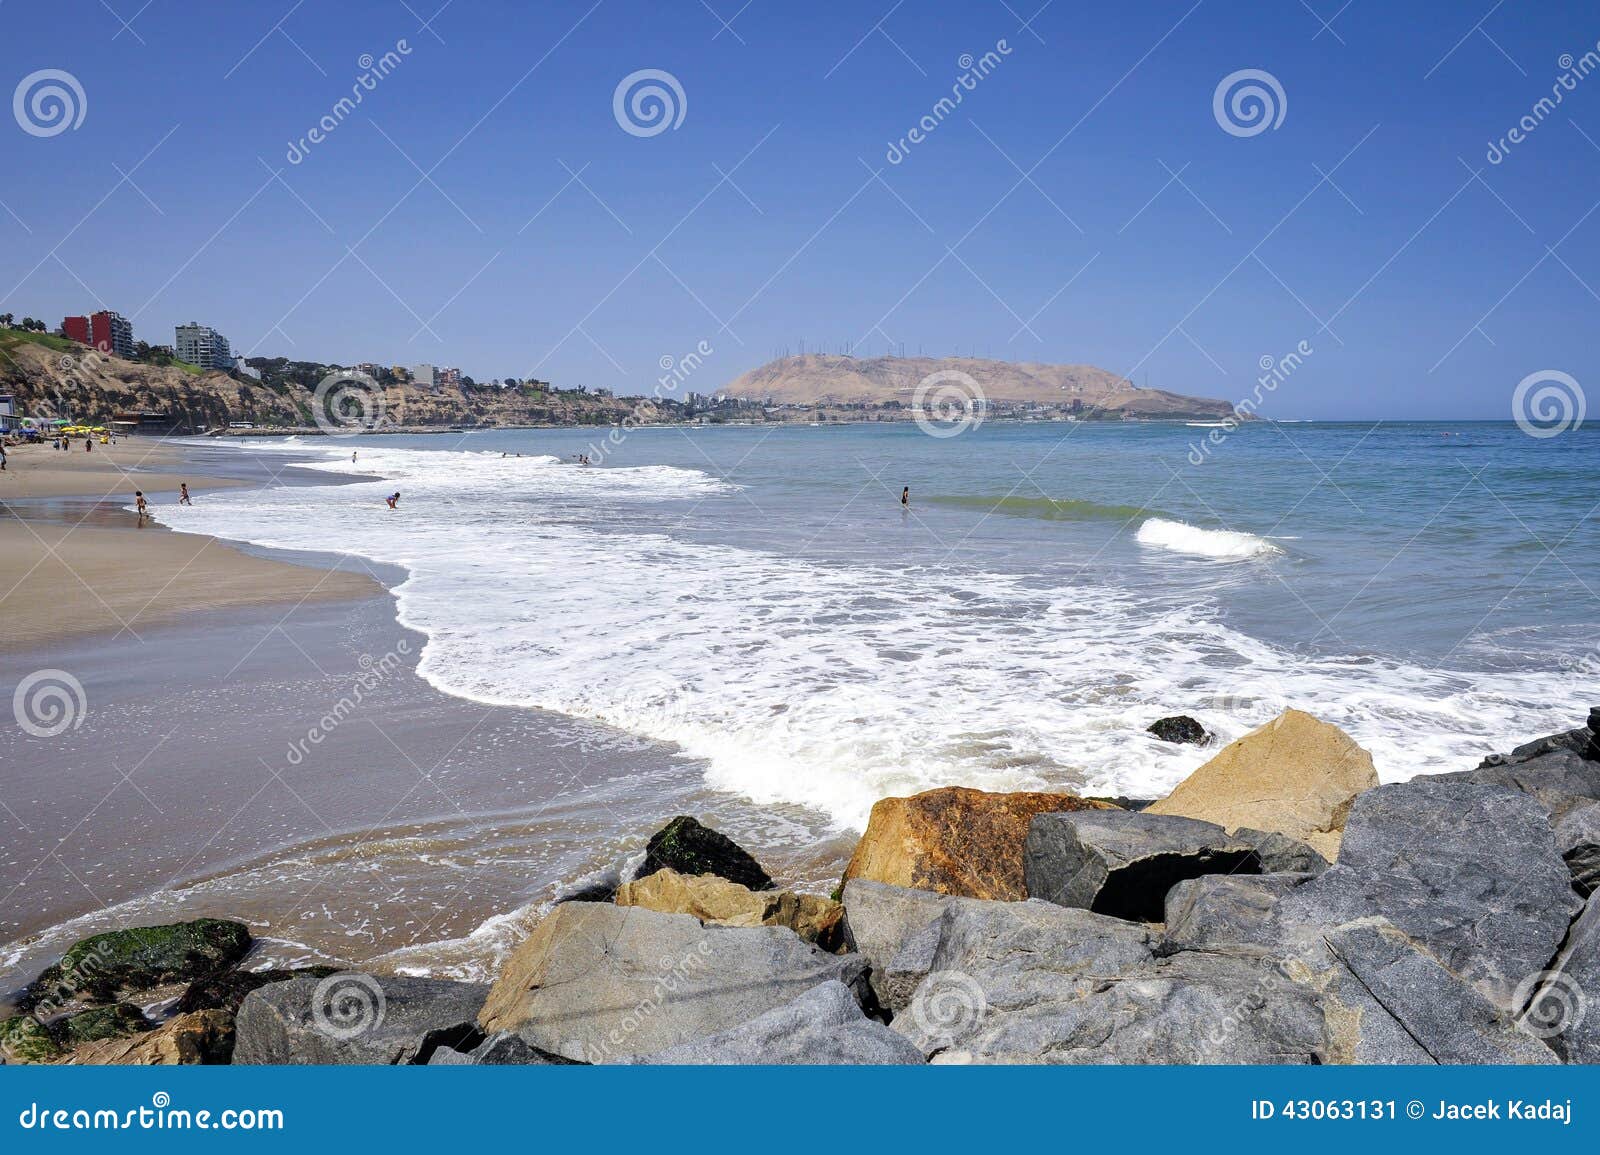 coastline in miraflores district in lima, peru,